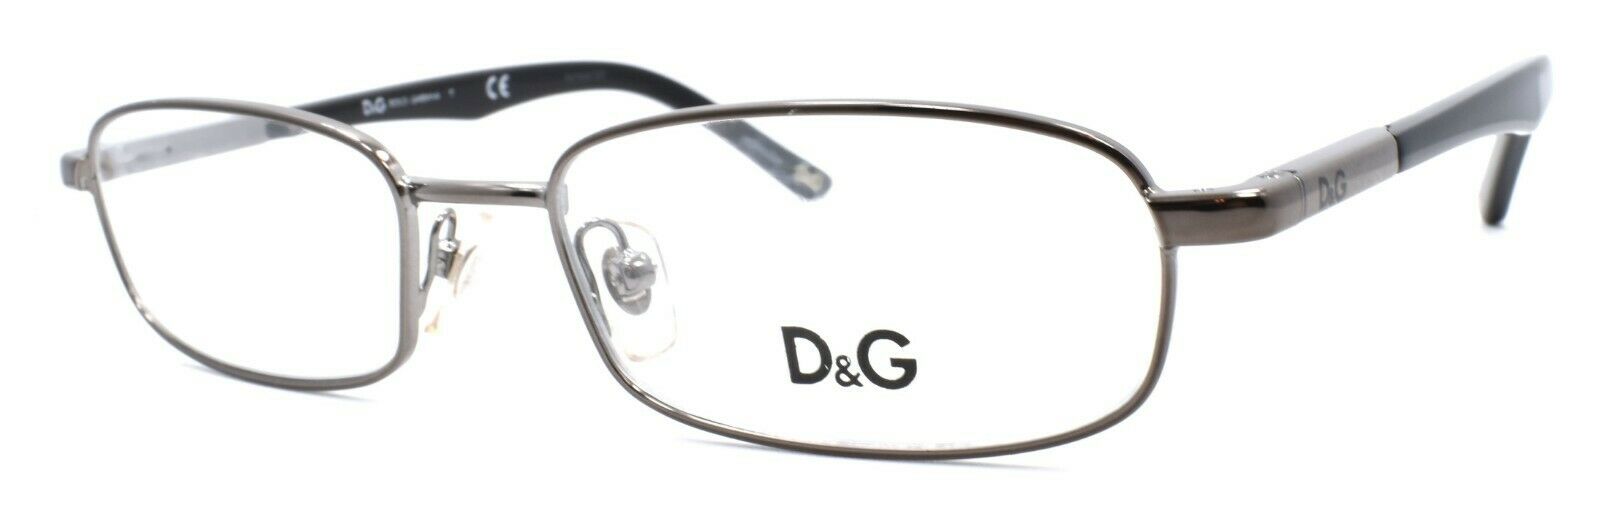 1-Dolce & Gabbana D&G 5062 079 Women's Eyeglasses 50-17-135 Gunmetal-679420320007-IKSpecs